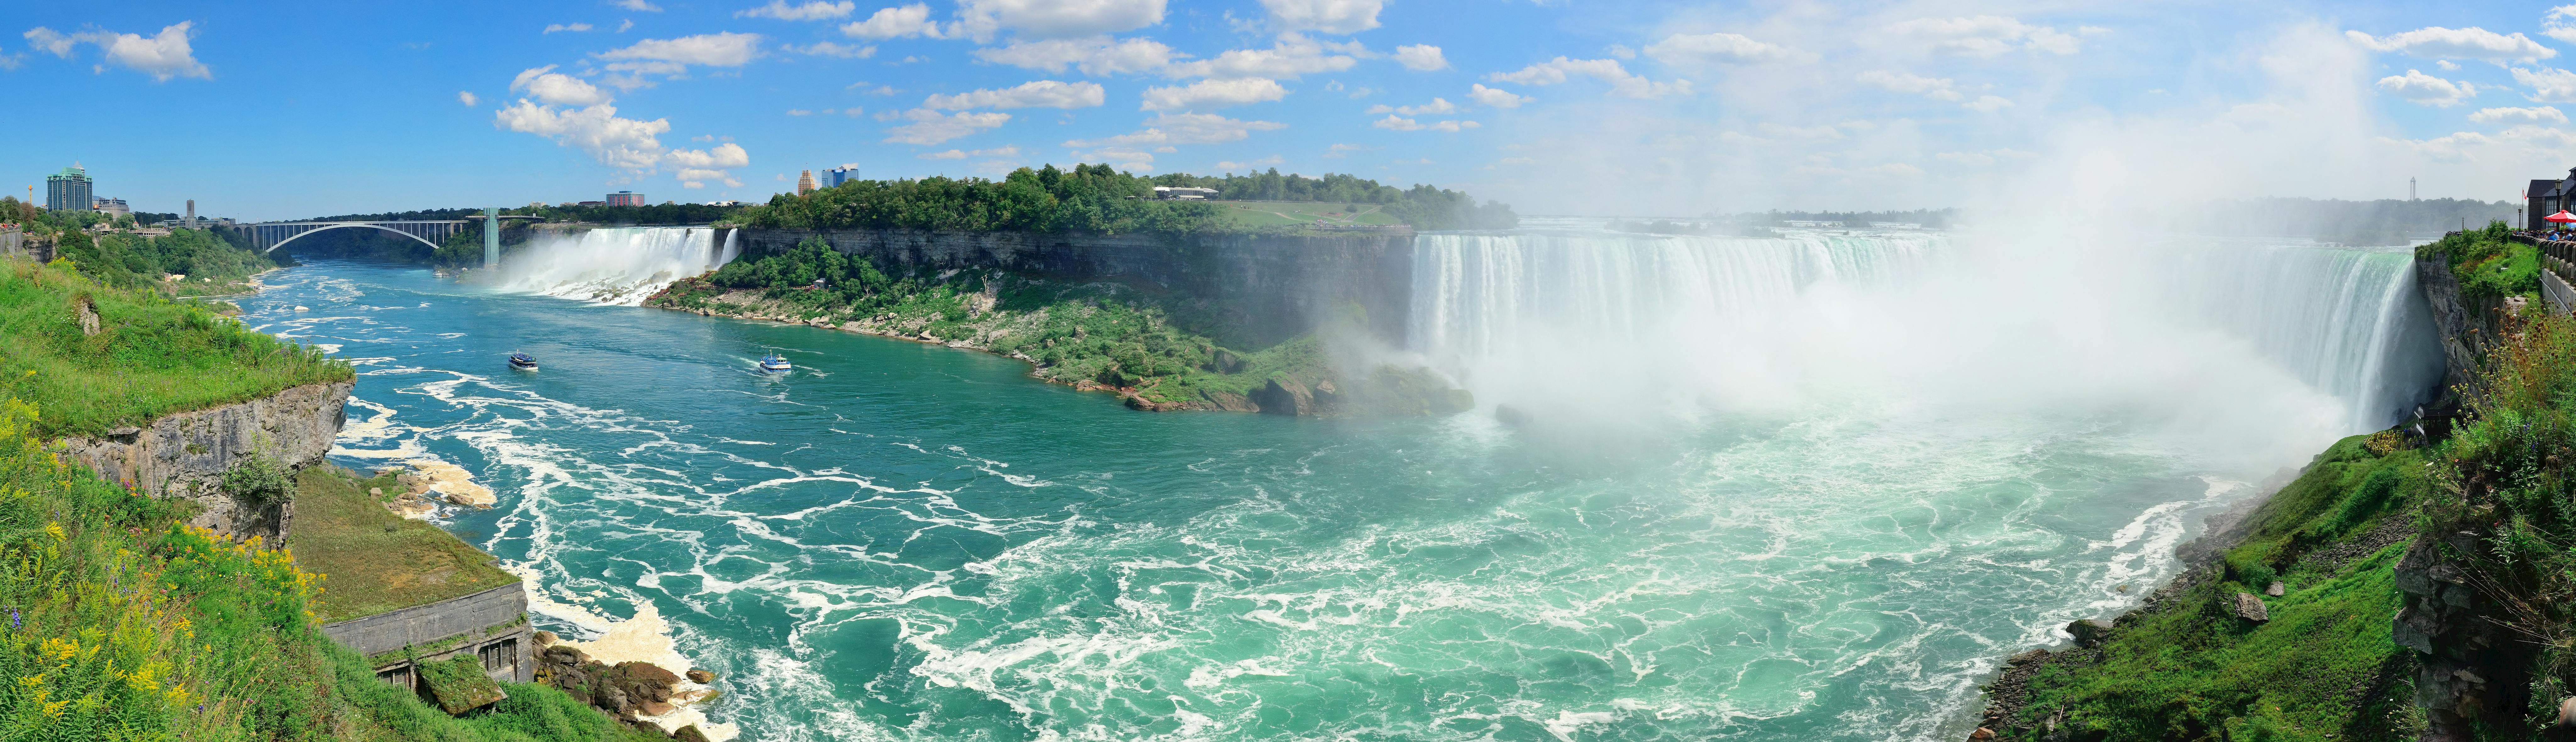 Niagara falls canada